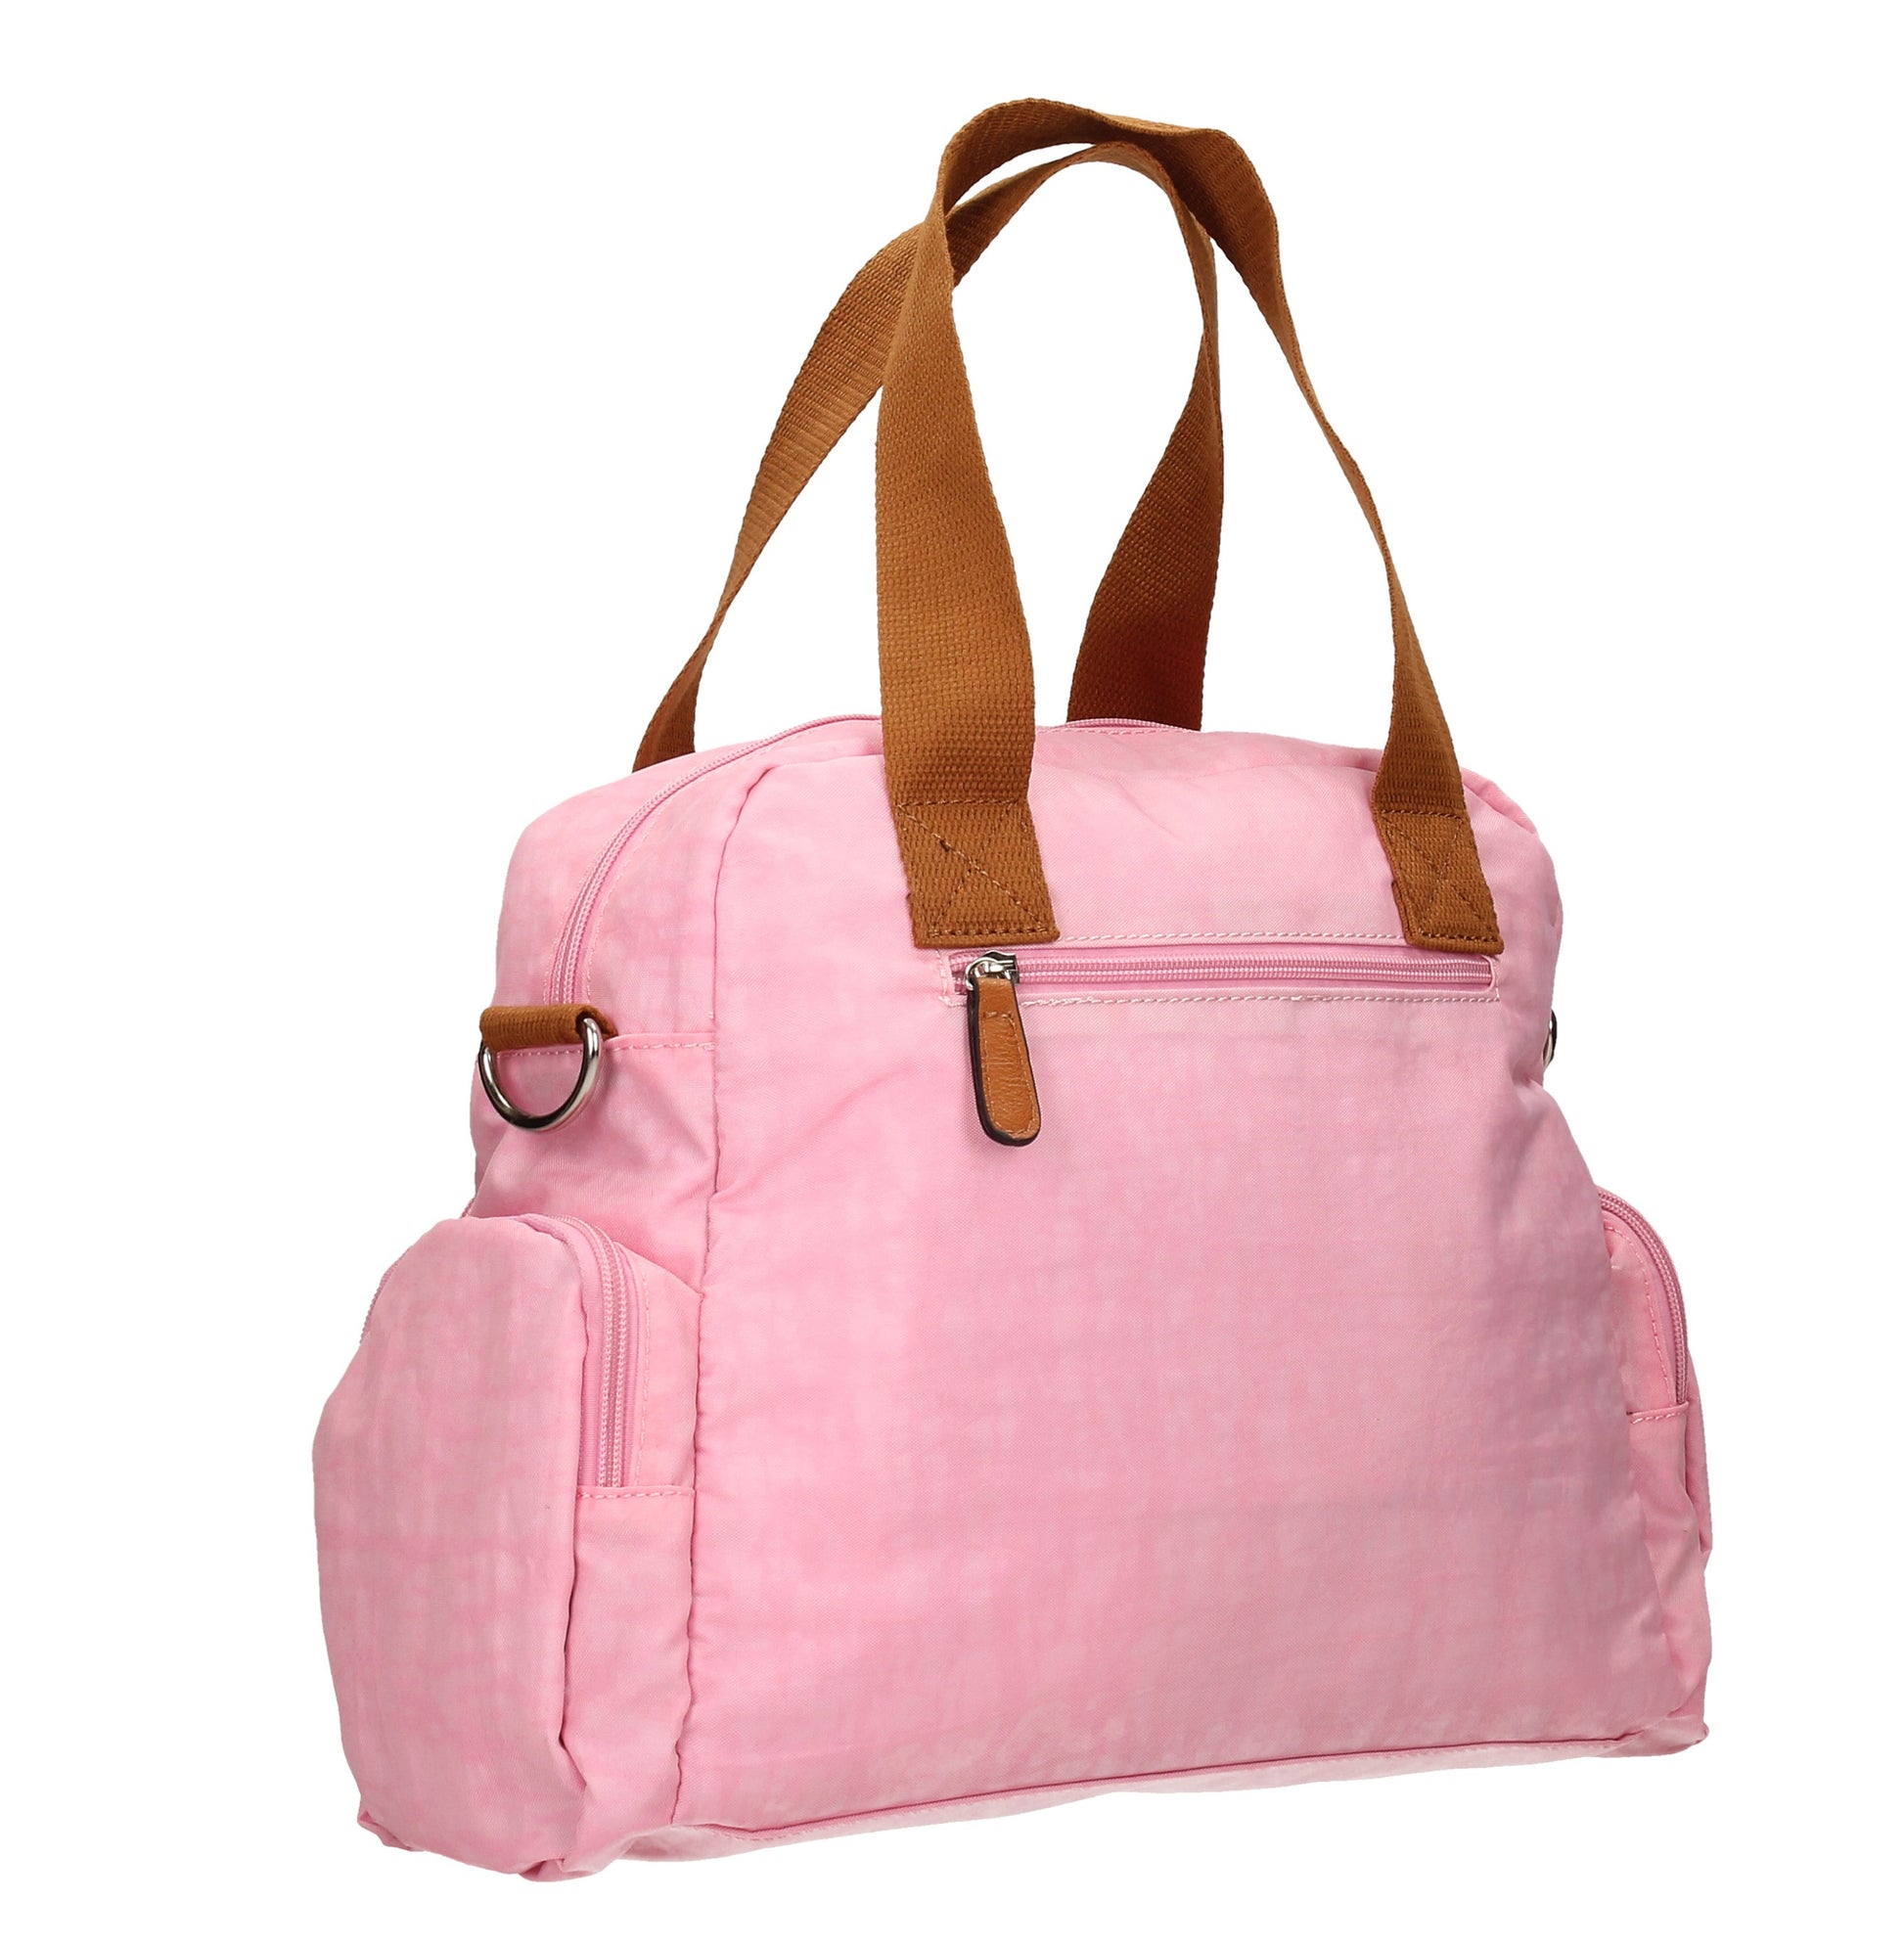 Swanky Swans Kempton Handbag with Lola Cat Motif Baby pinkCheap Fashion Wedding Work School